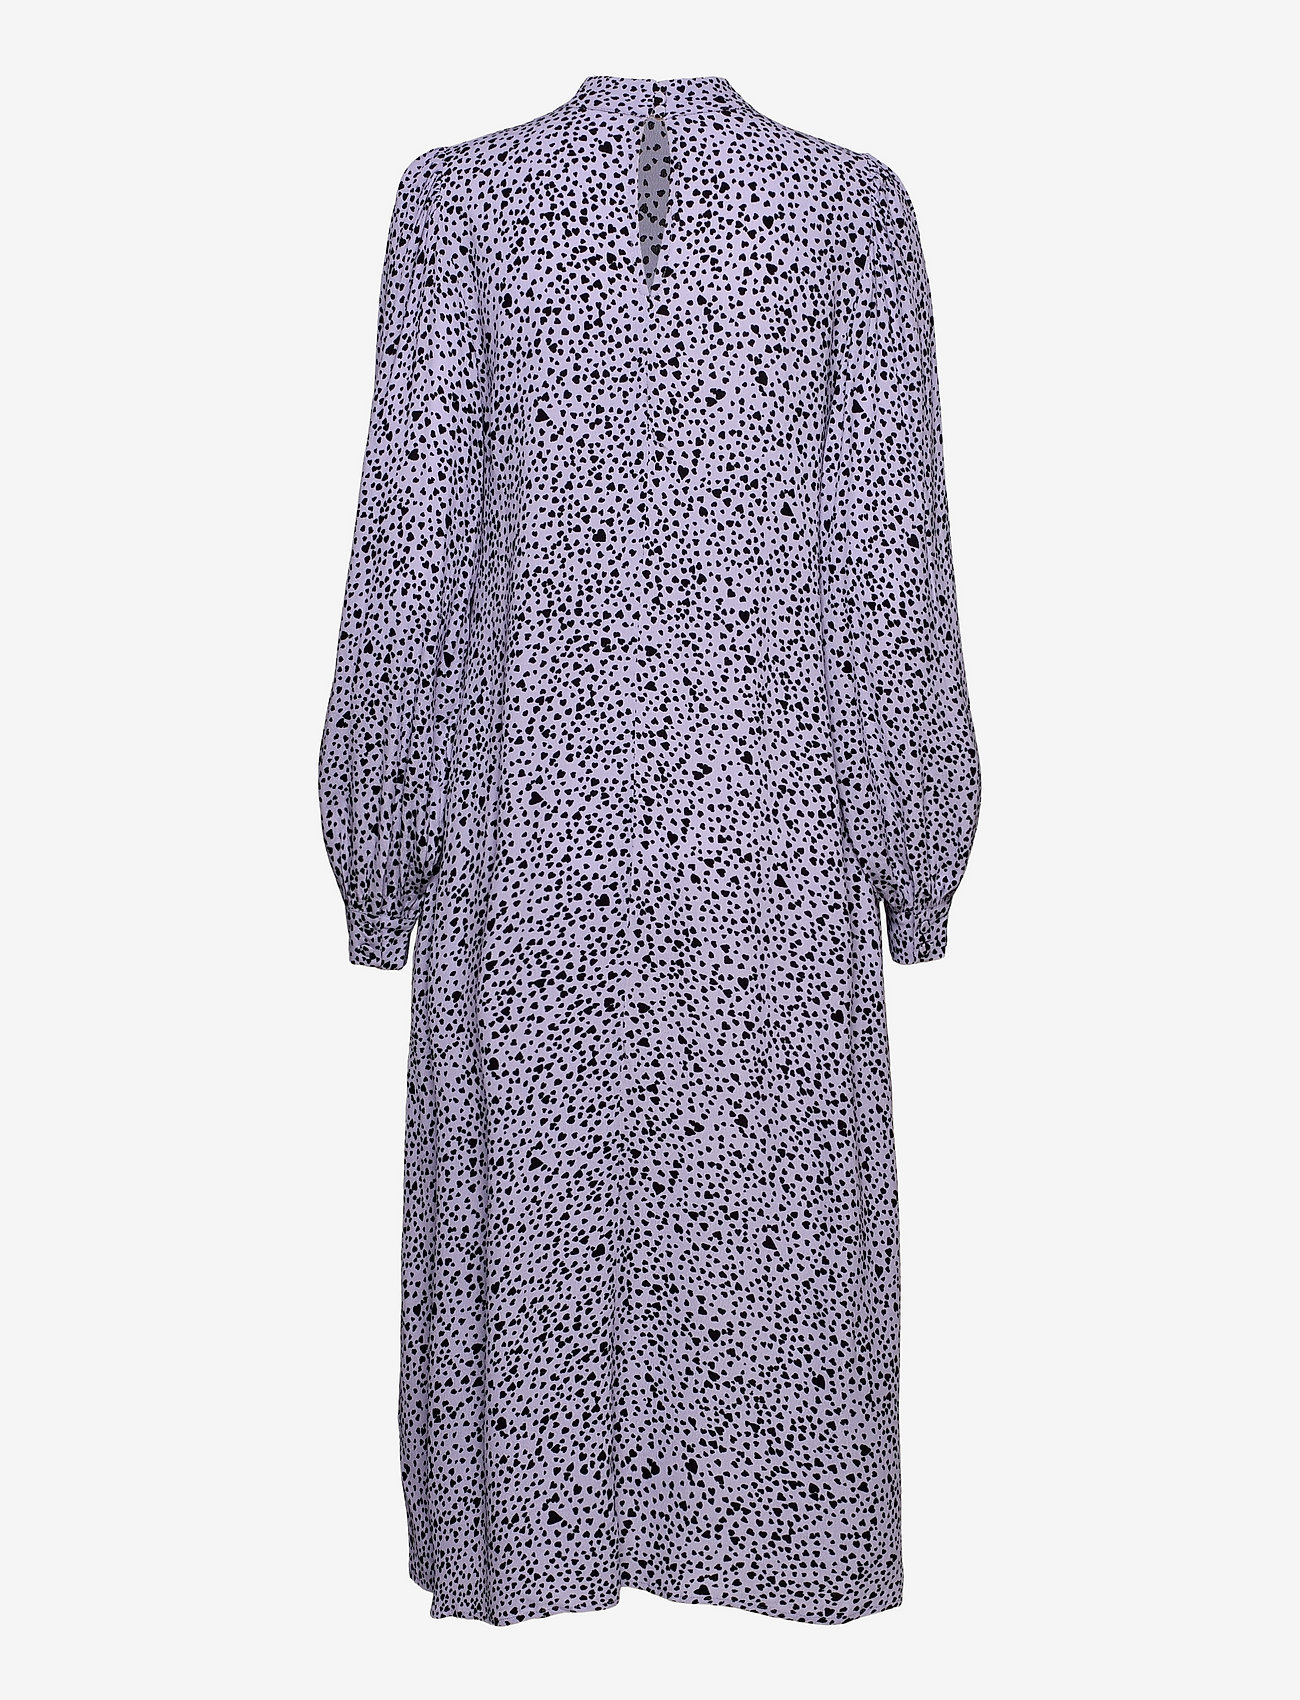 mbyM - Hestia - midi-jurken - decima lavender print - 1